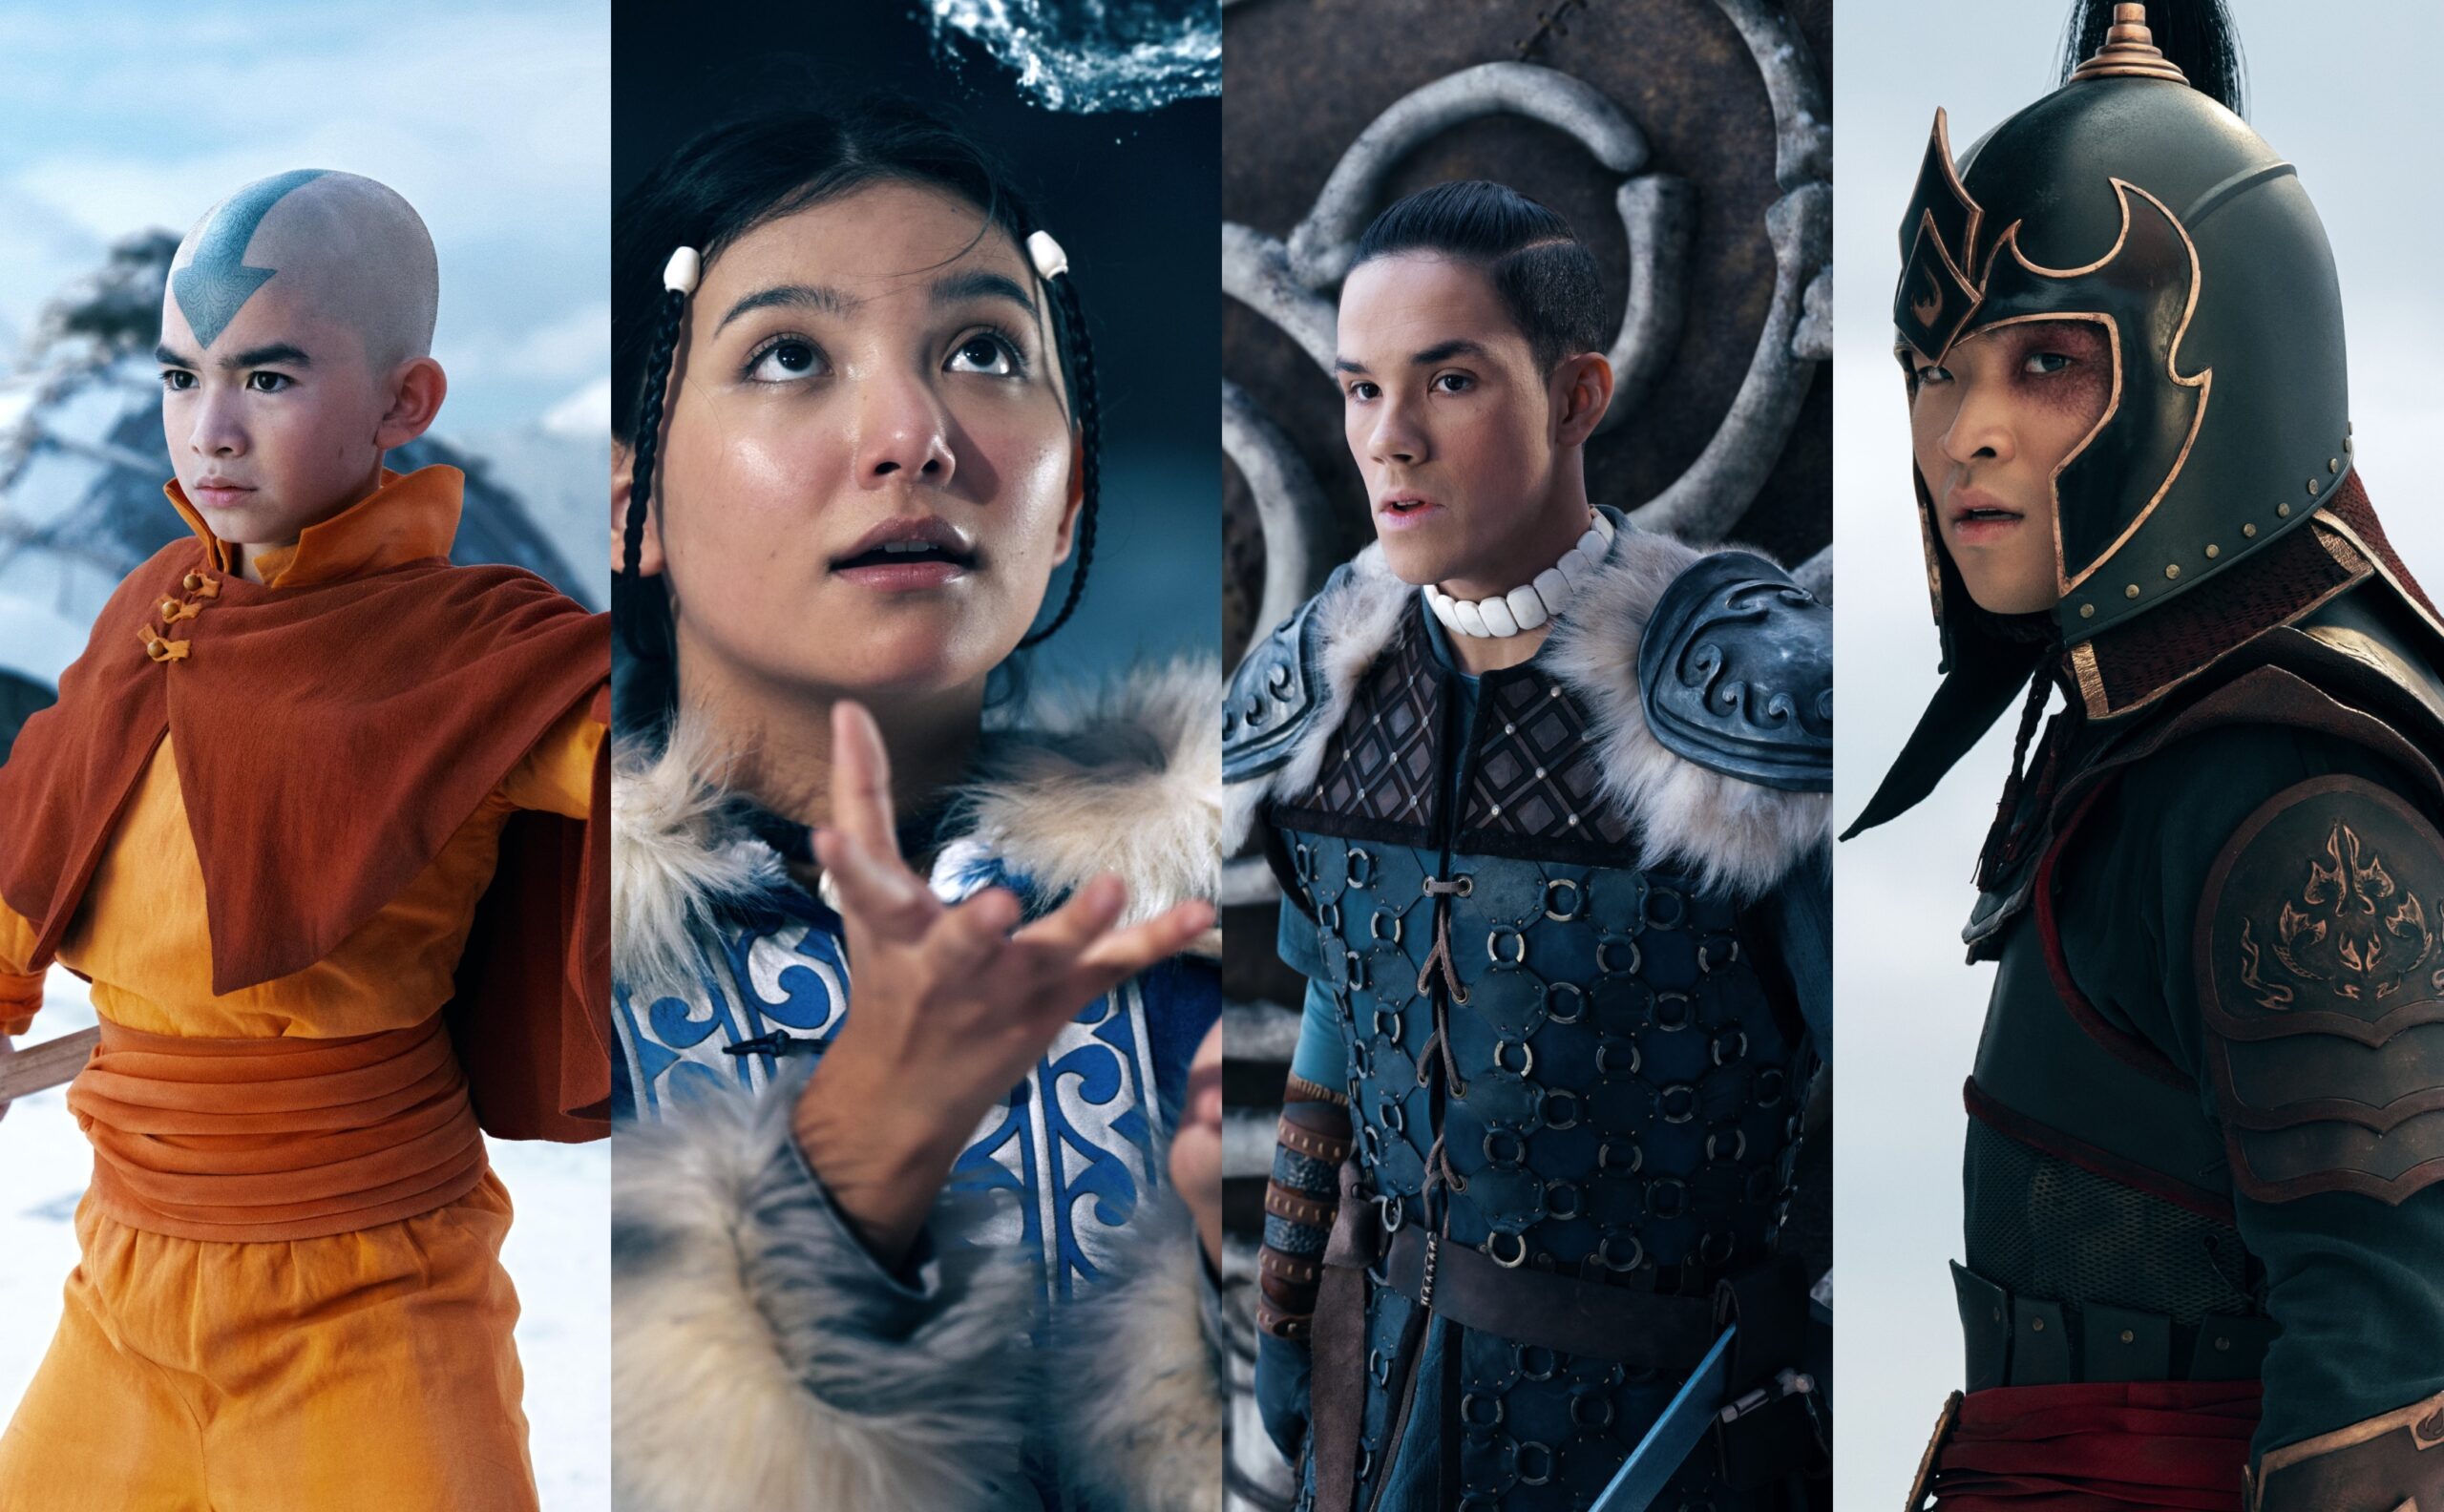 Netflix Announces Avatar The Last Airbenders LiveAction TV Release Window